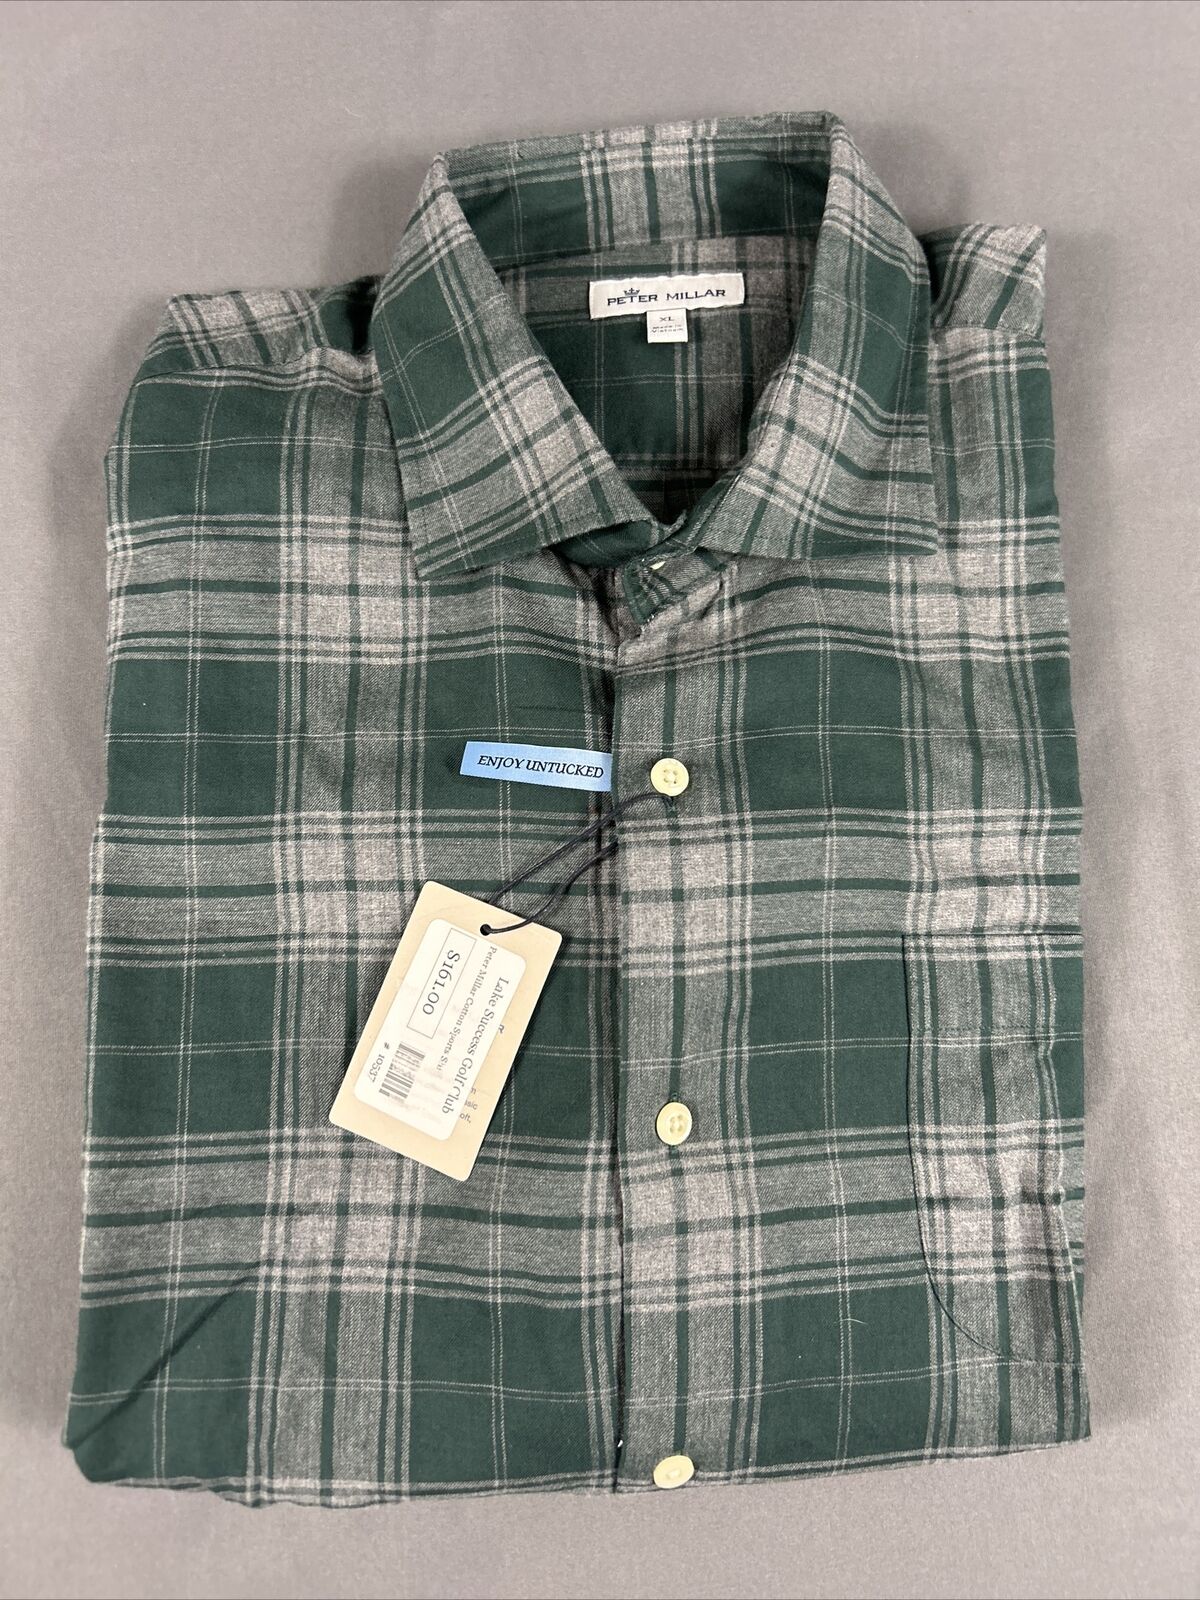 Peter Millar Sport Shirt Crown LS Untucked XL Green Cotton NWT MSRP $160